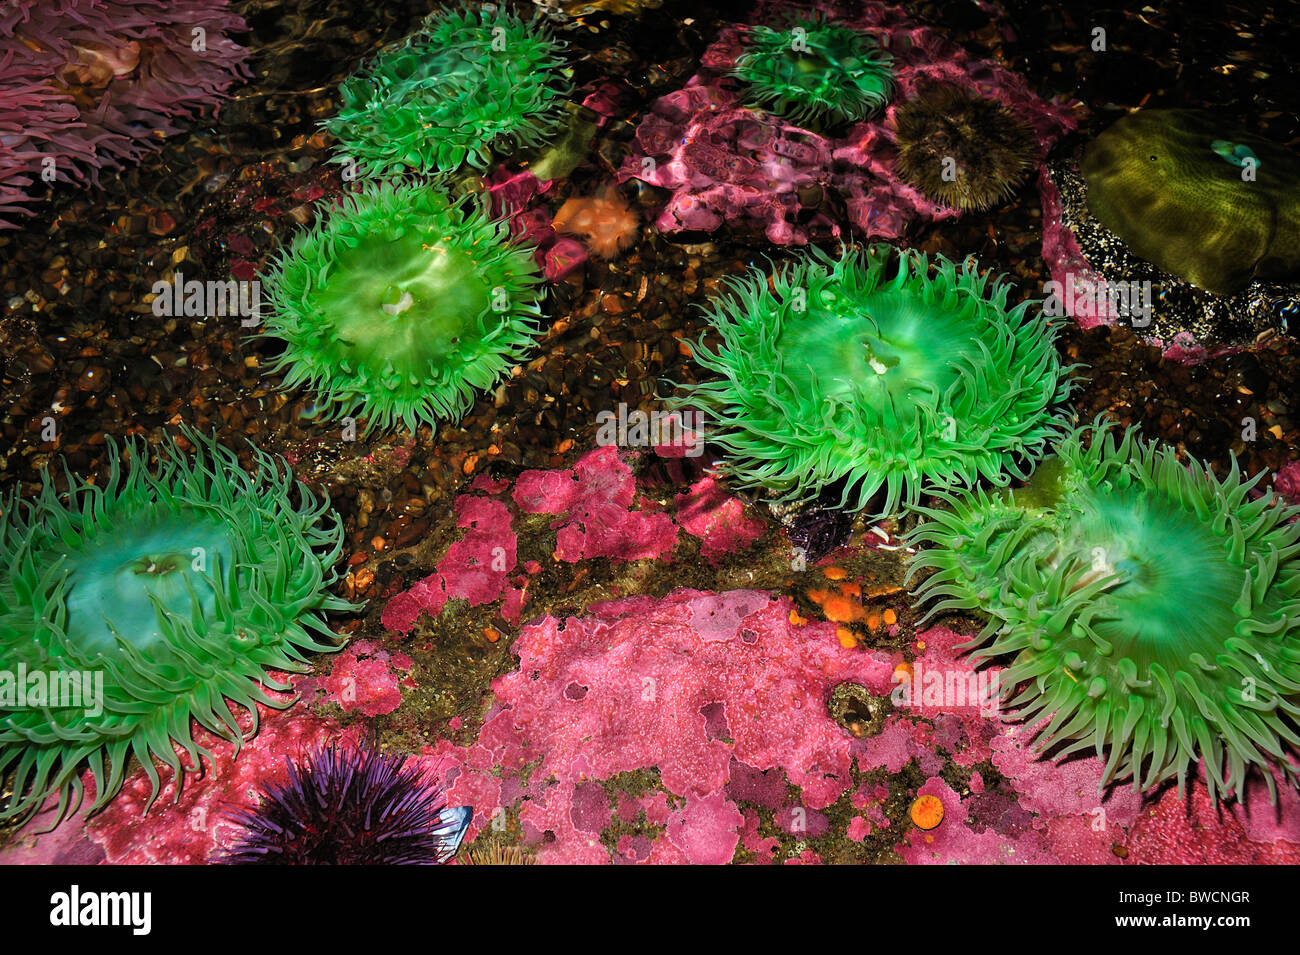 Verde gigante anemone, Anthopleura xanthogrammica, captive Foto Stock